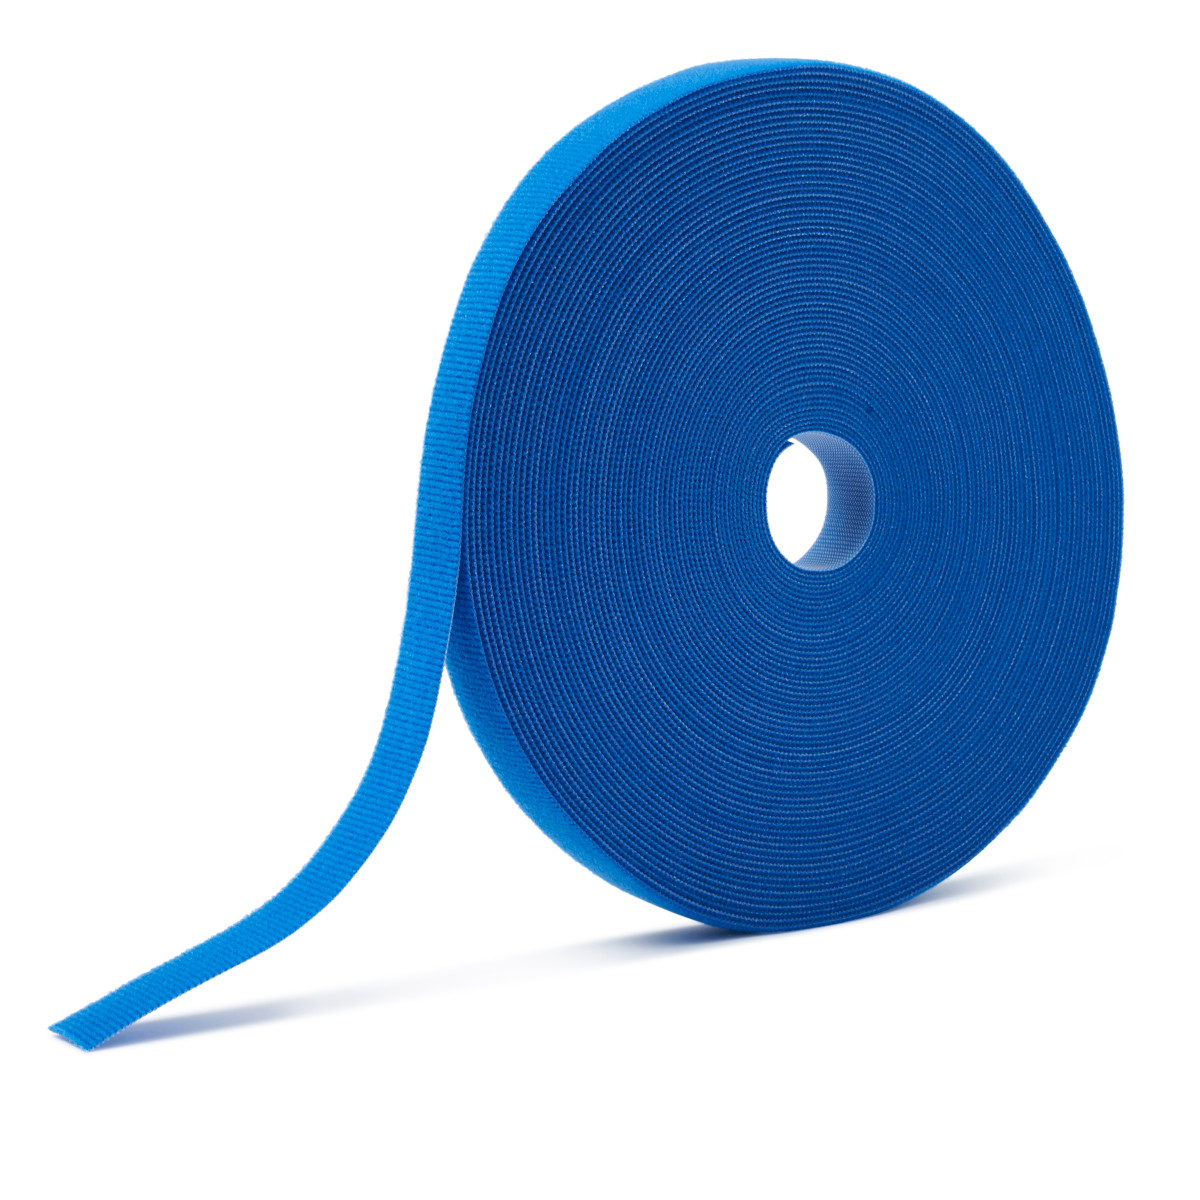 25 Yard Velcro Brand One-Wrap Tape Roll - Flame Retardant